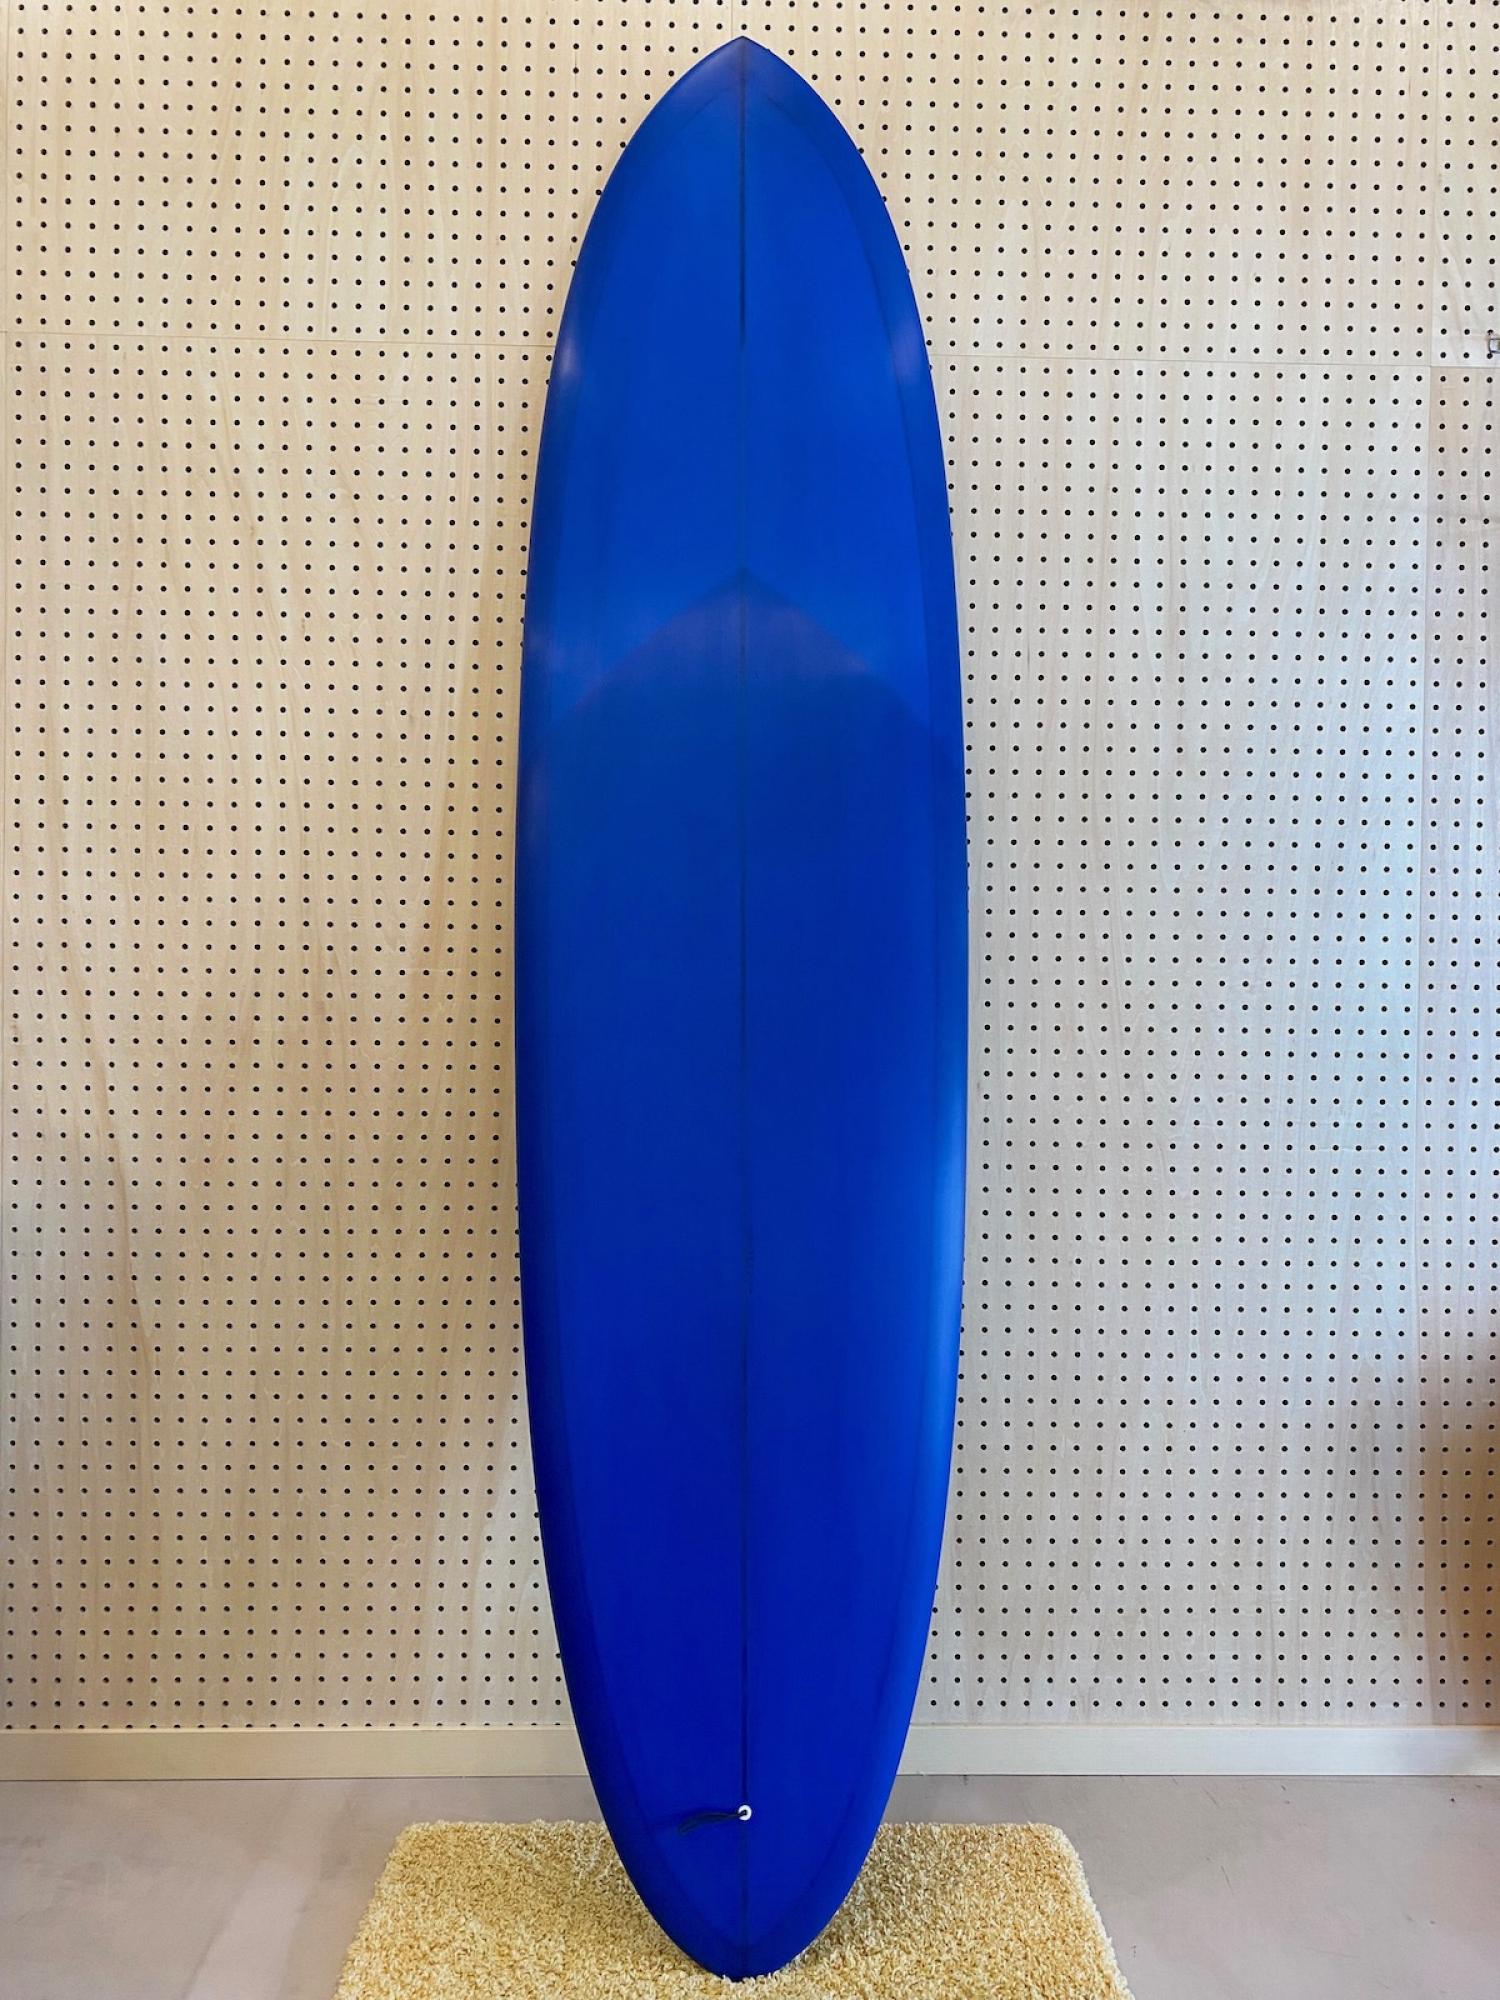 The Little Wing 7.4 RYAN SAKAL SURFBOARDS